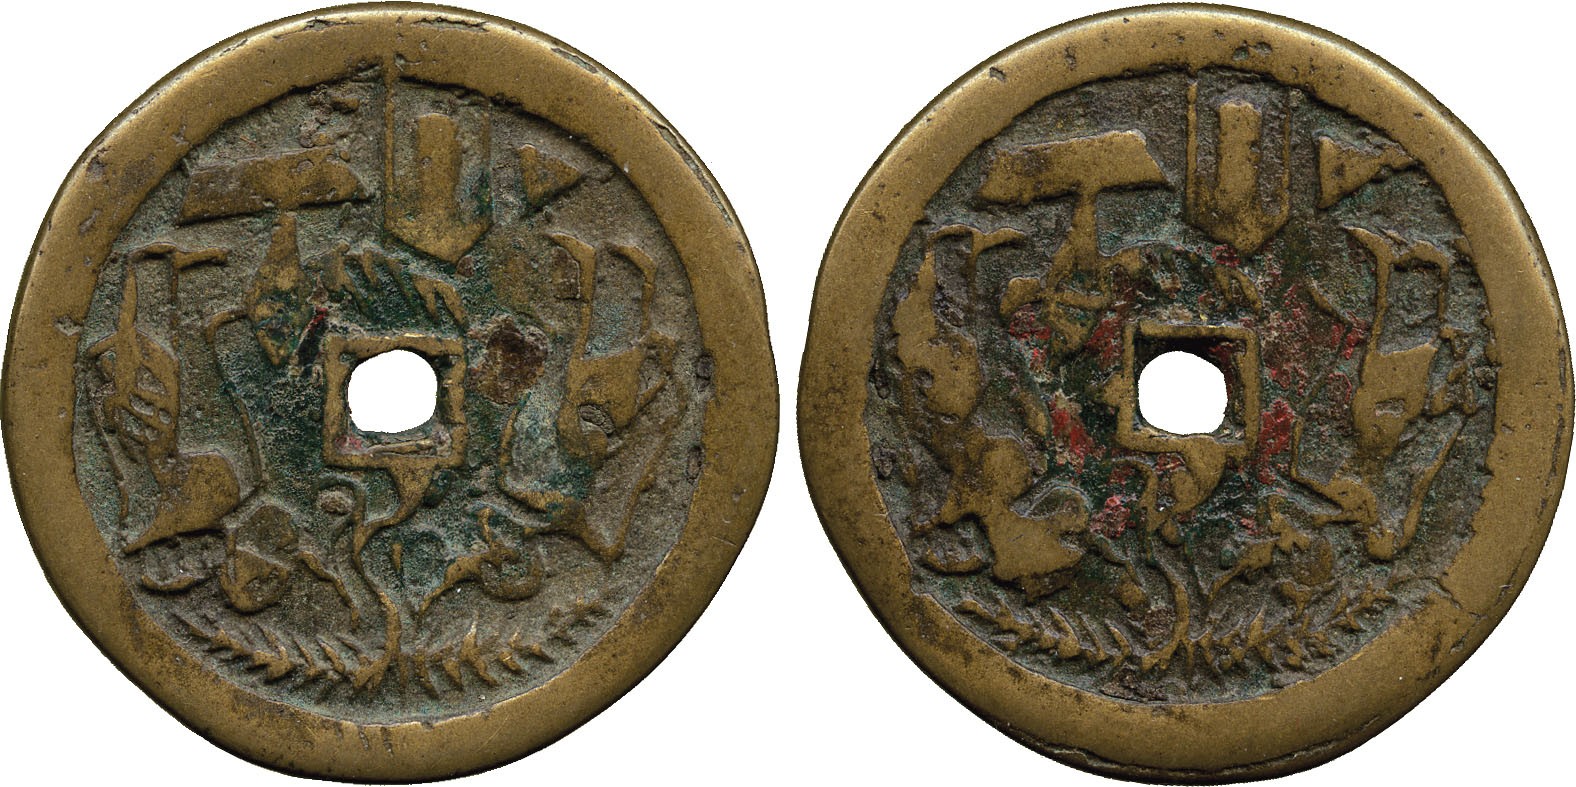 COINS. INDONESIA – JAVA. COINS. INDONESIA – JAVA. Java: Brass Magic Coin (gobog or amulet). ,